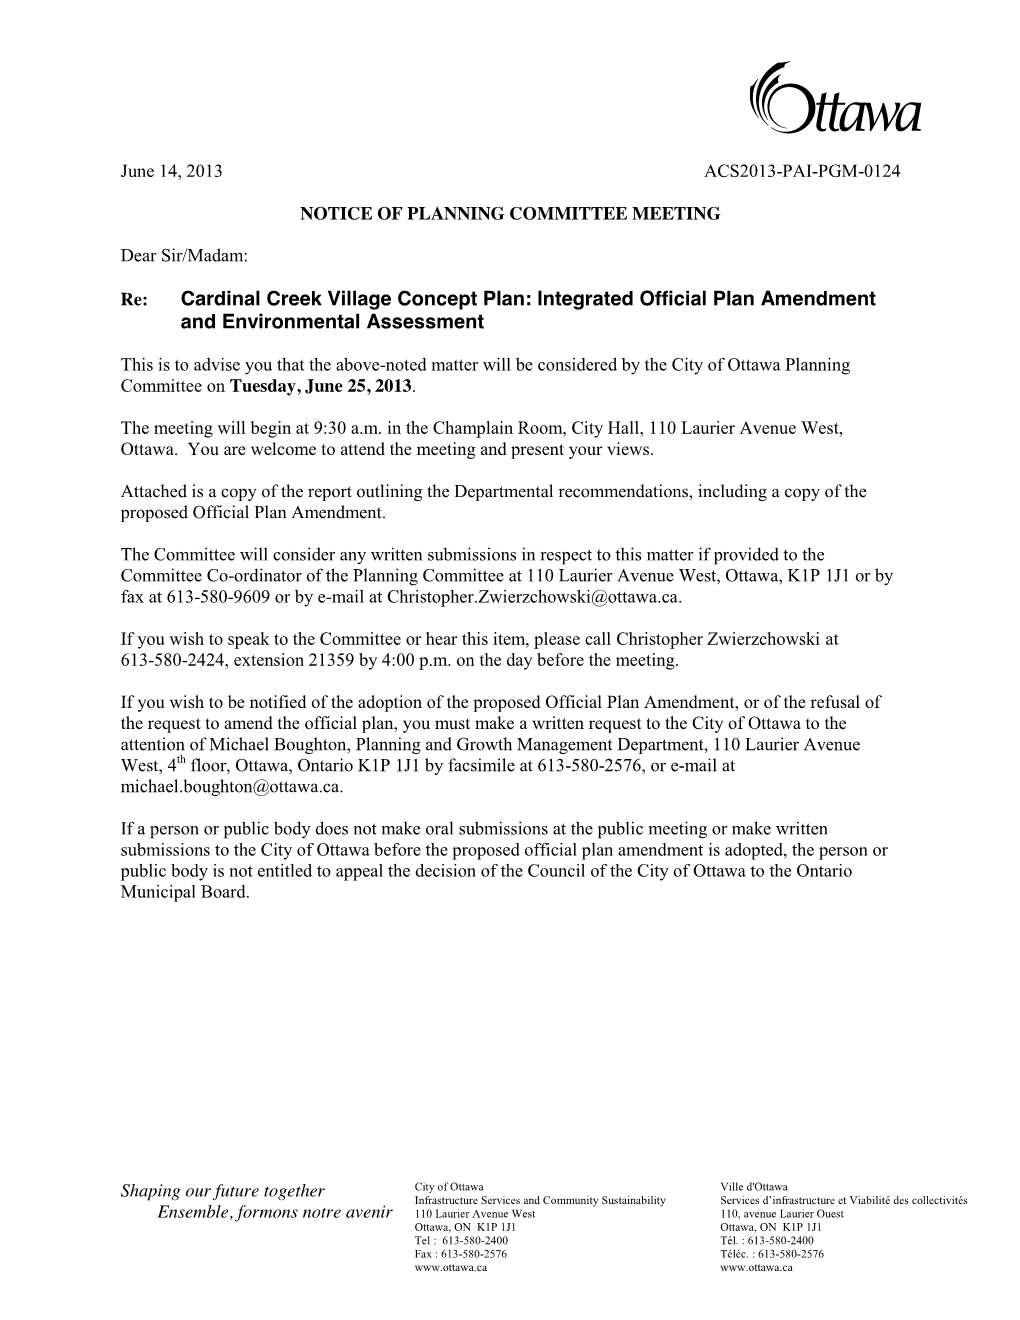 Cardinal Creek Village Concept Plan: Integrated Official Plan Amendment and Environmental Assessment